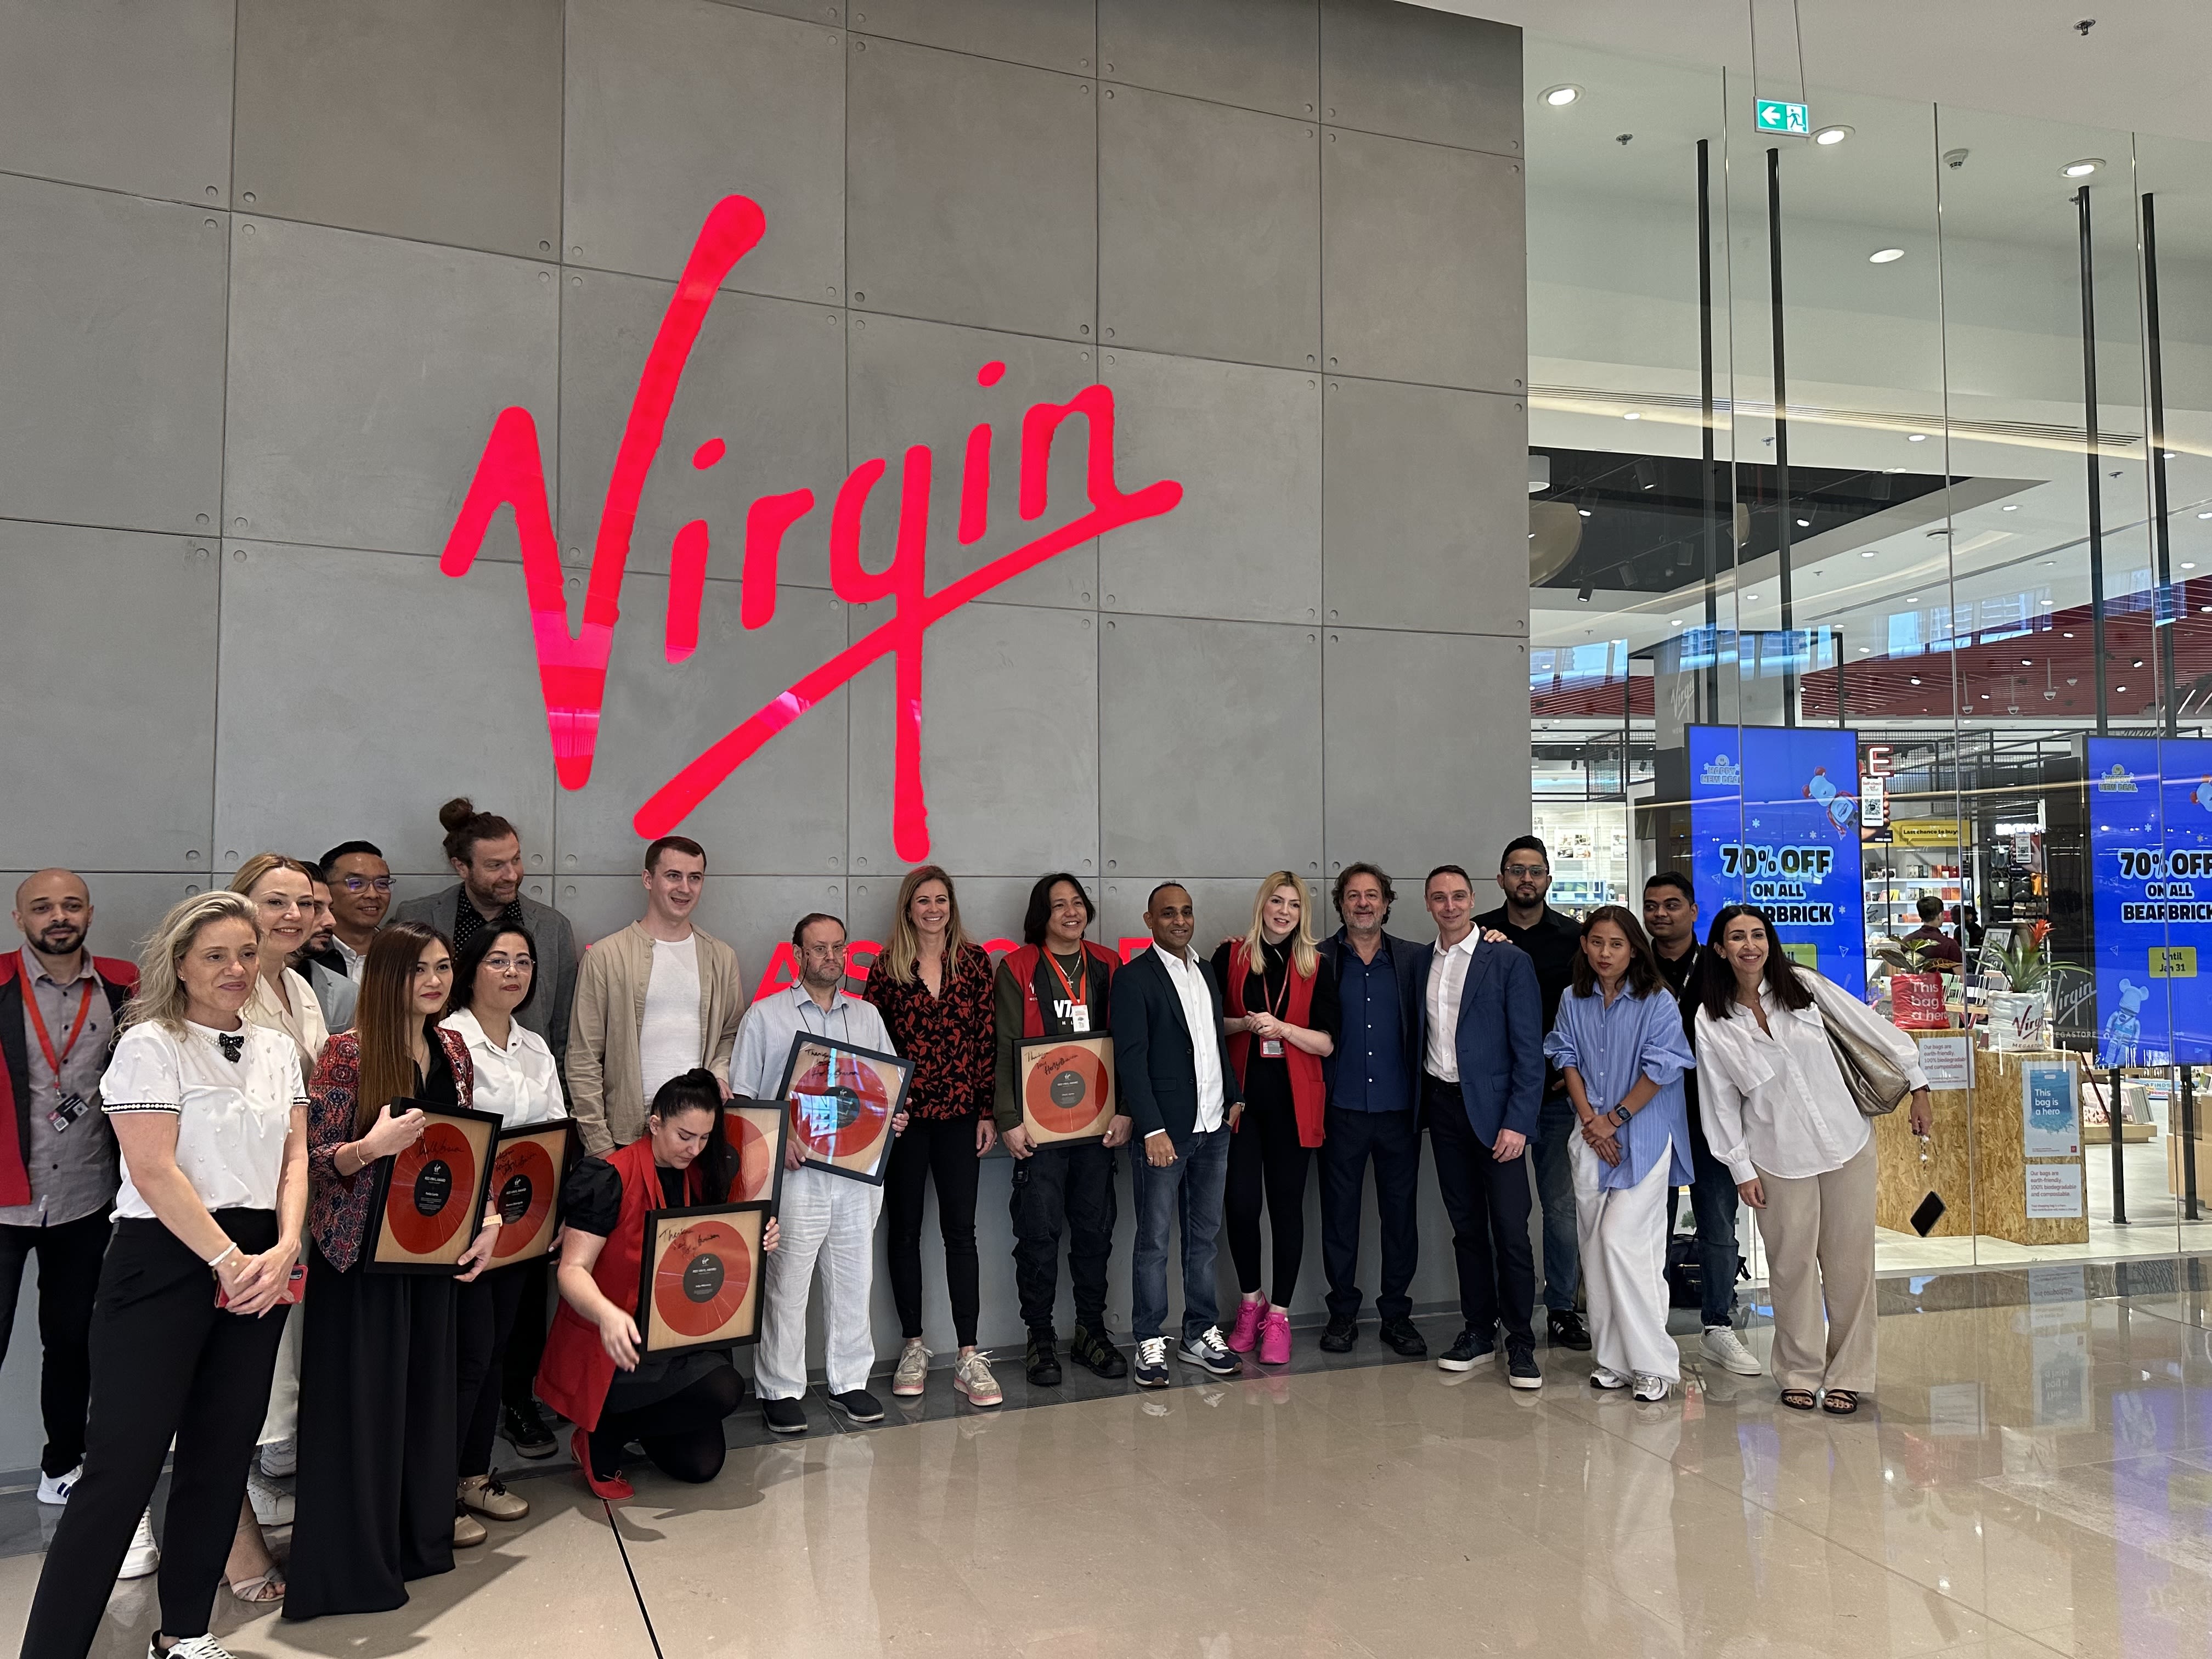 Holly Branson with the team at Virgin Megastore Dubai